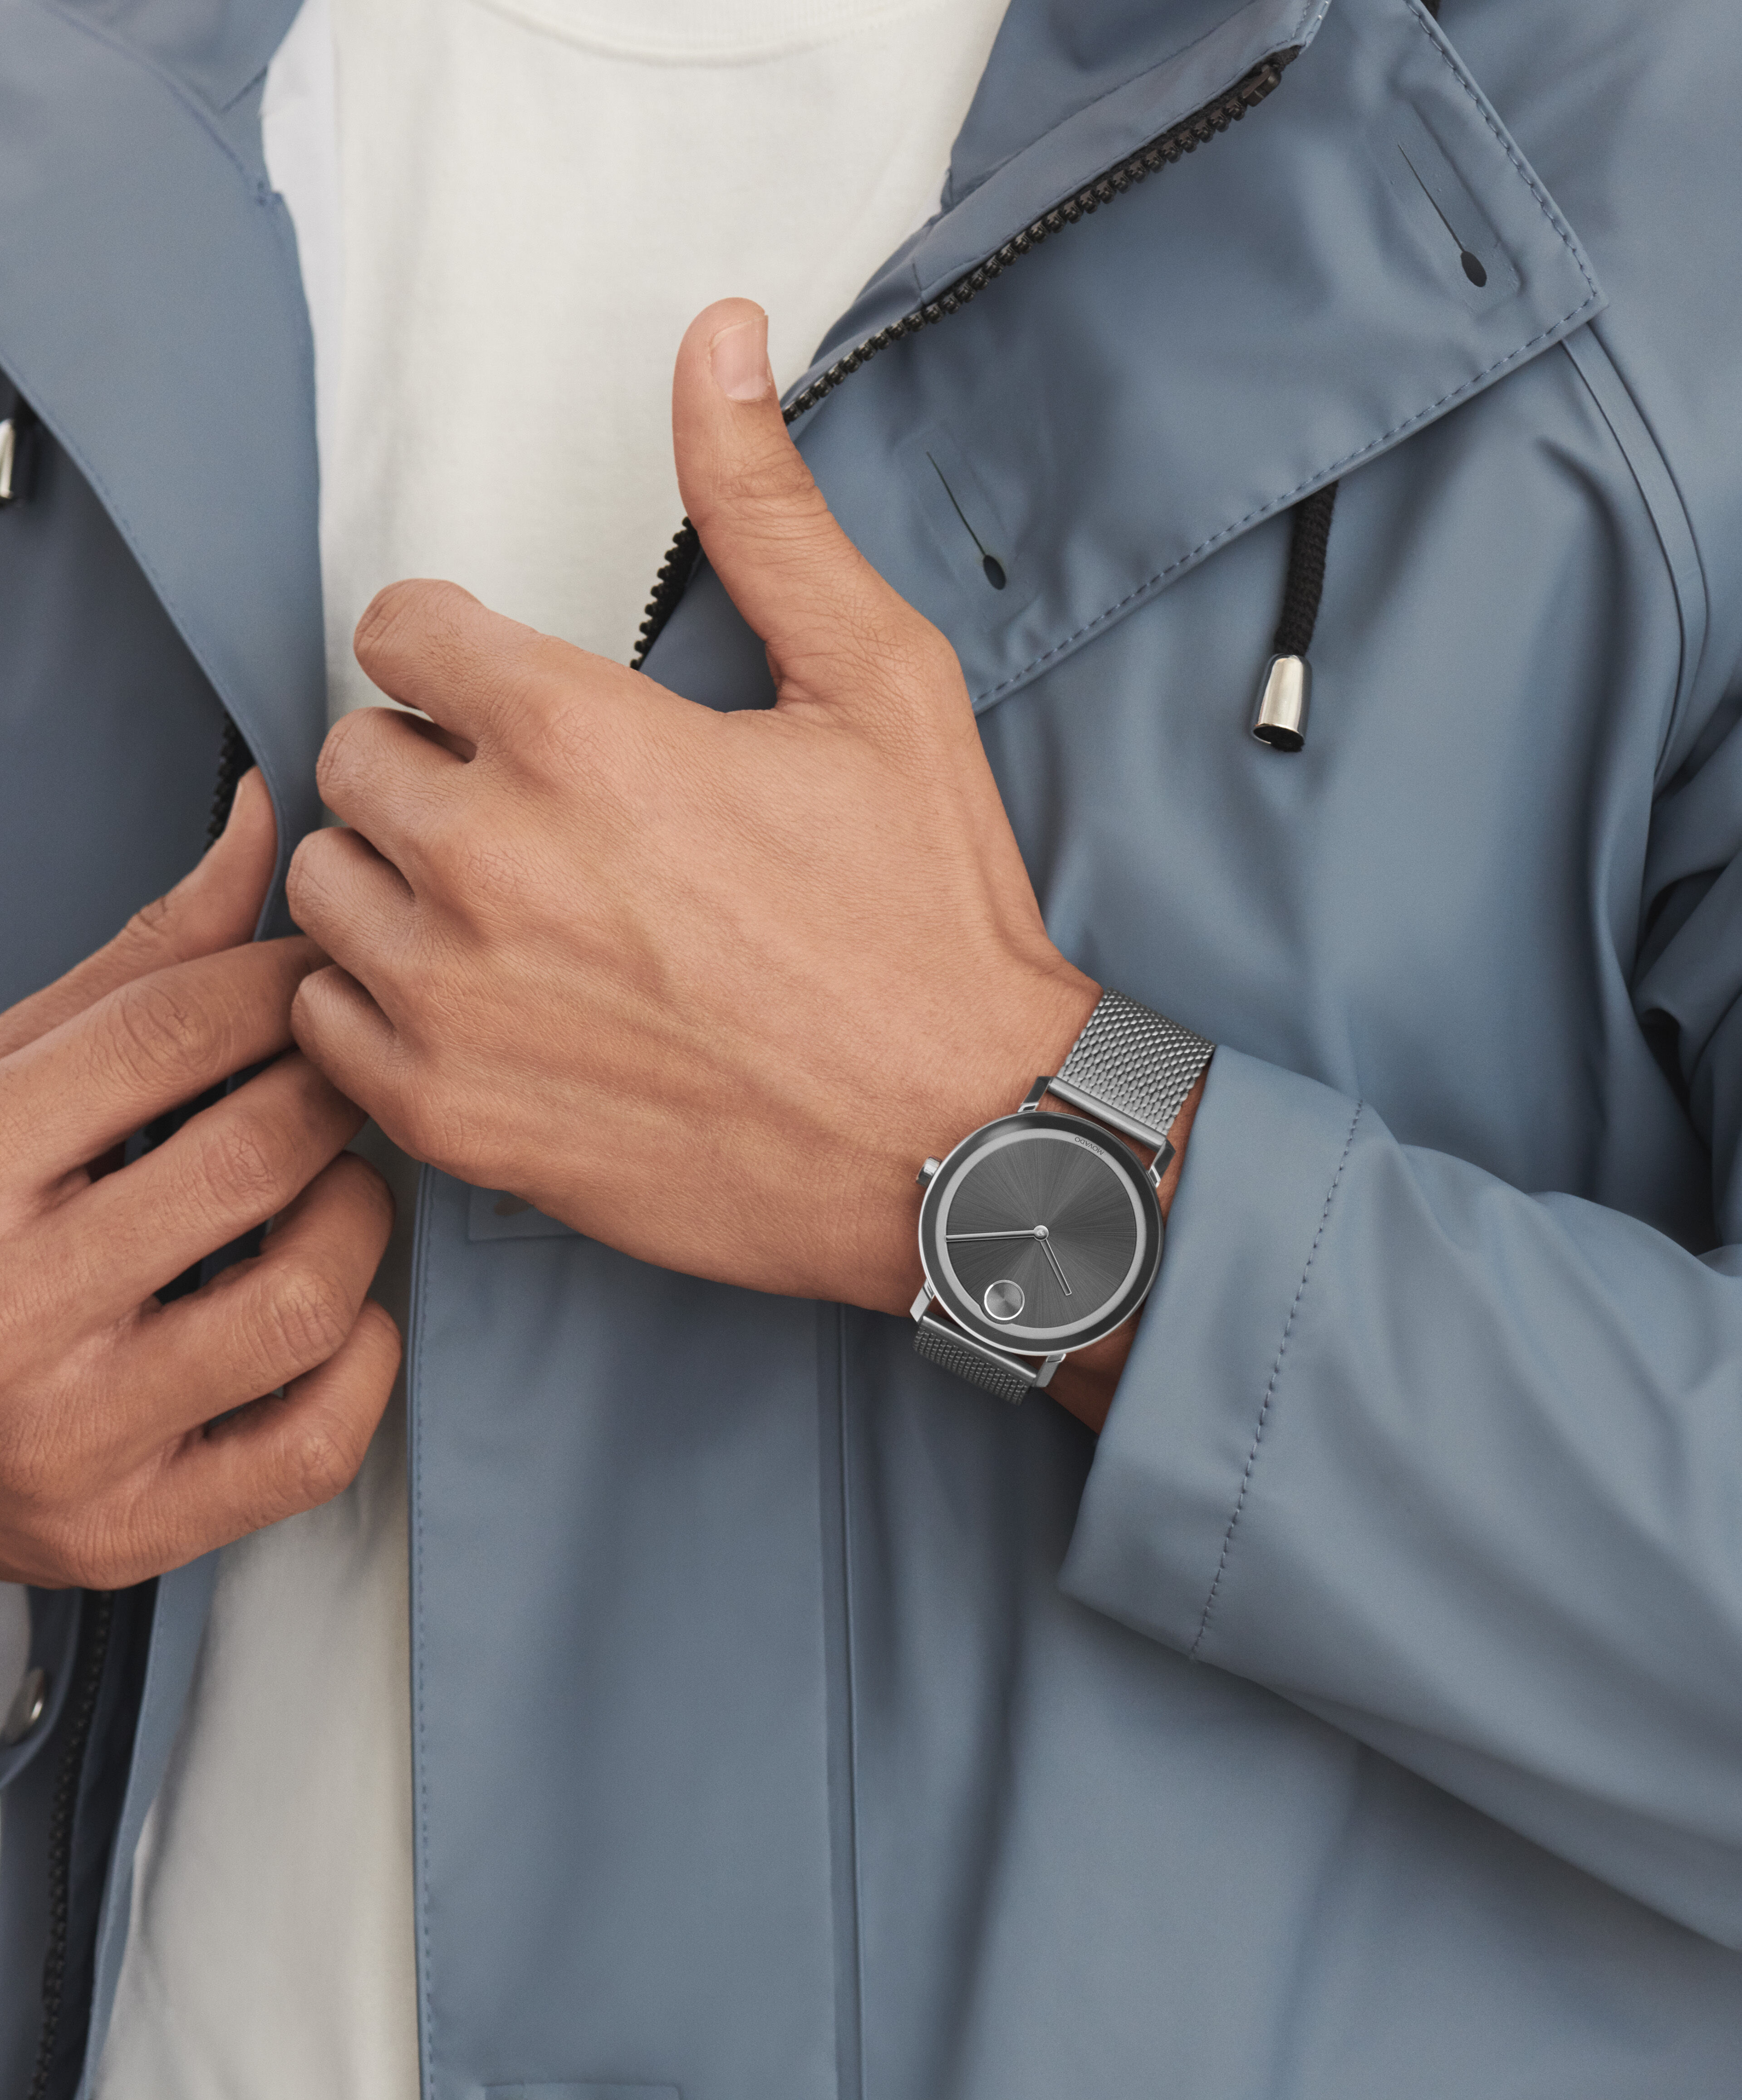 Aliexpress Breitling Watches Replica